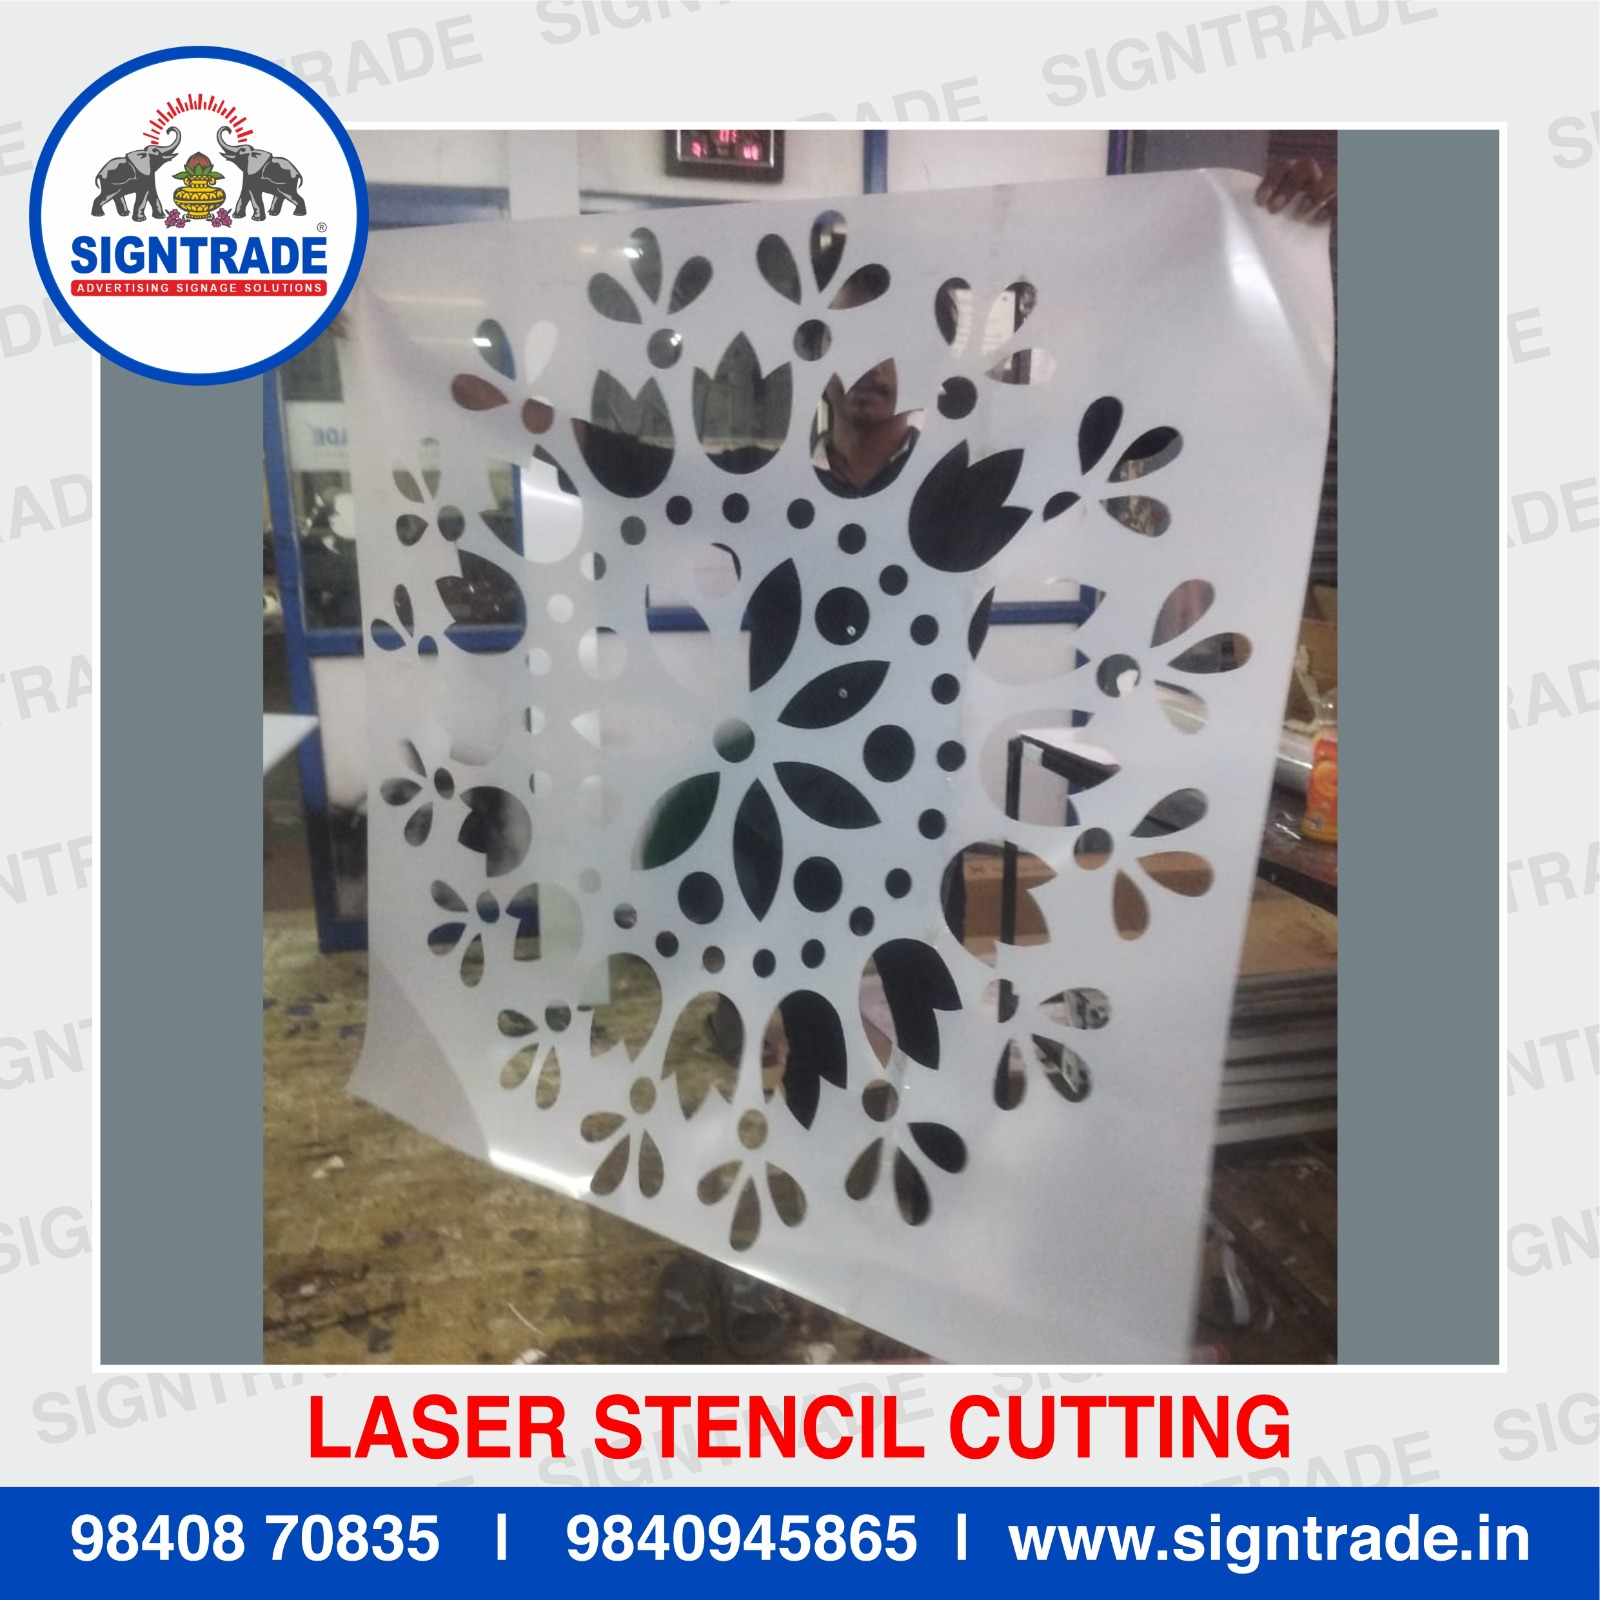 Laser Stencil Cutting Services in Chennai